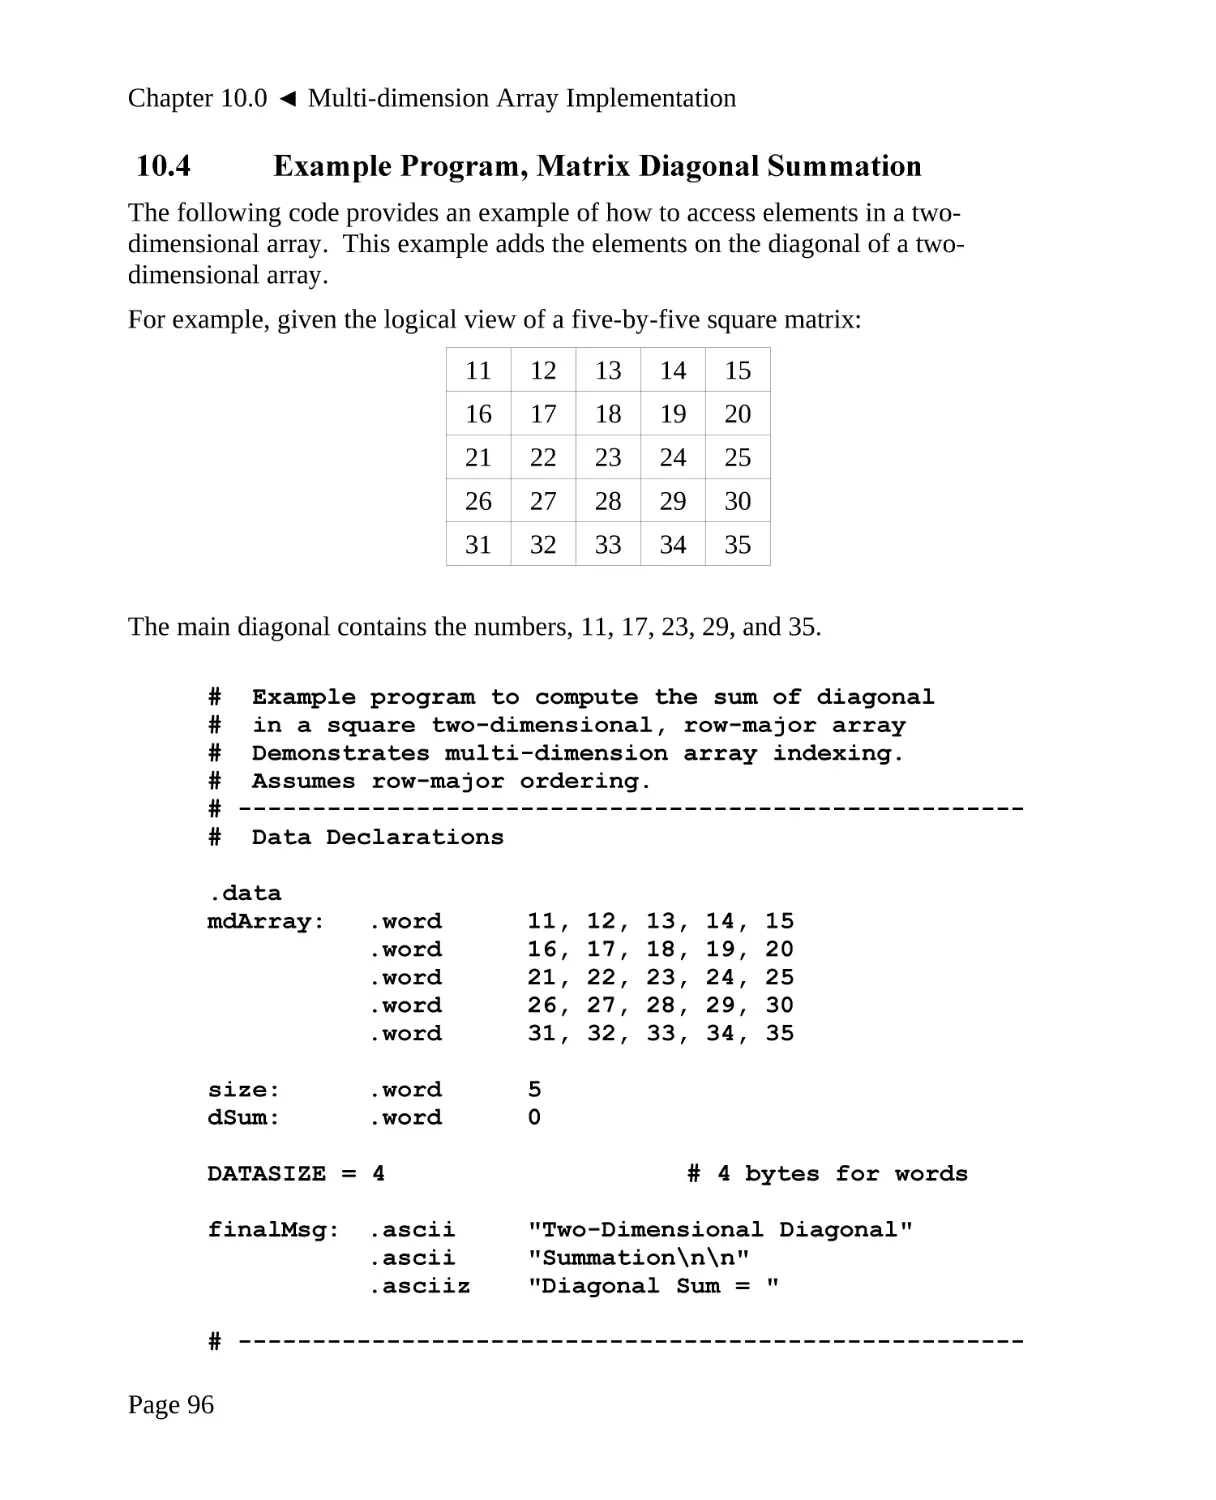 10.4 Example Program, Matrix Diagonal Summation